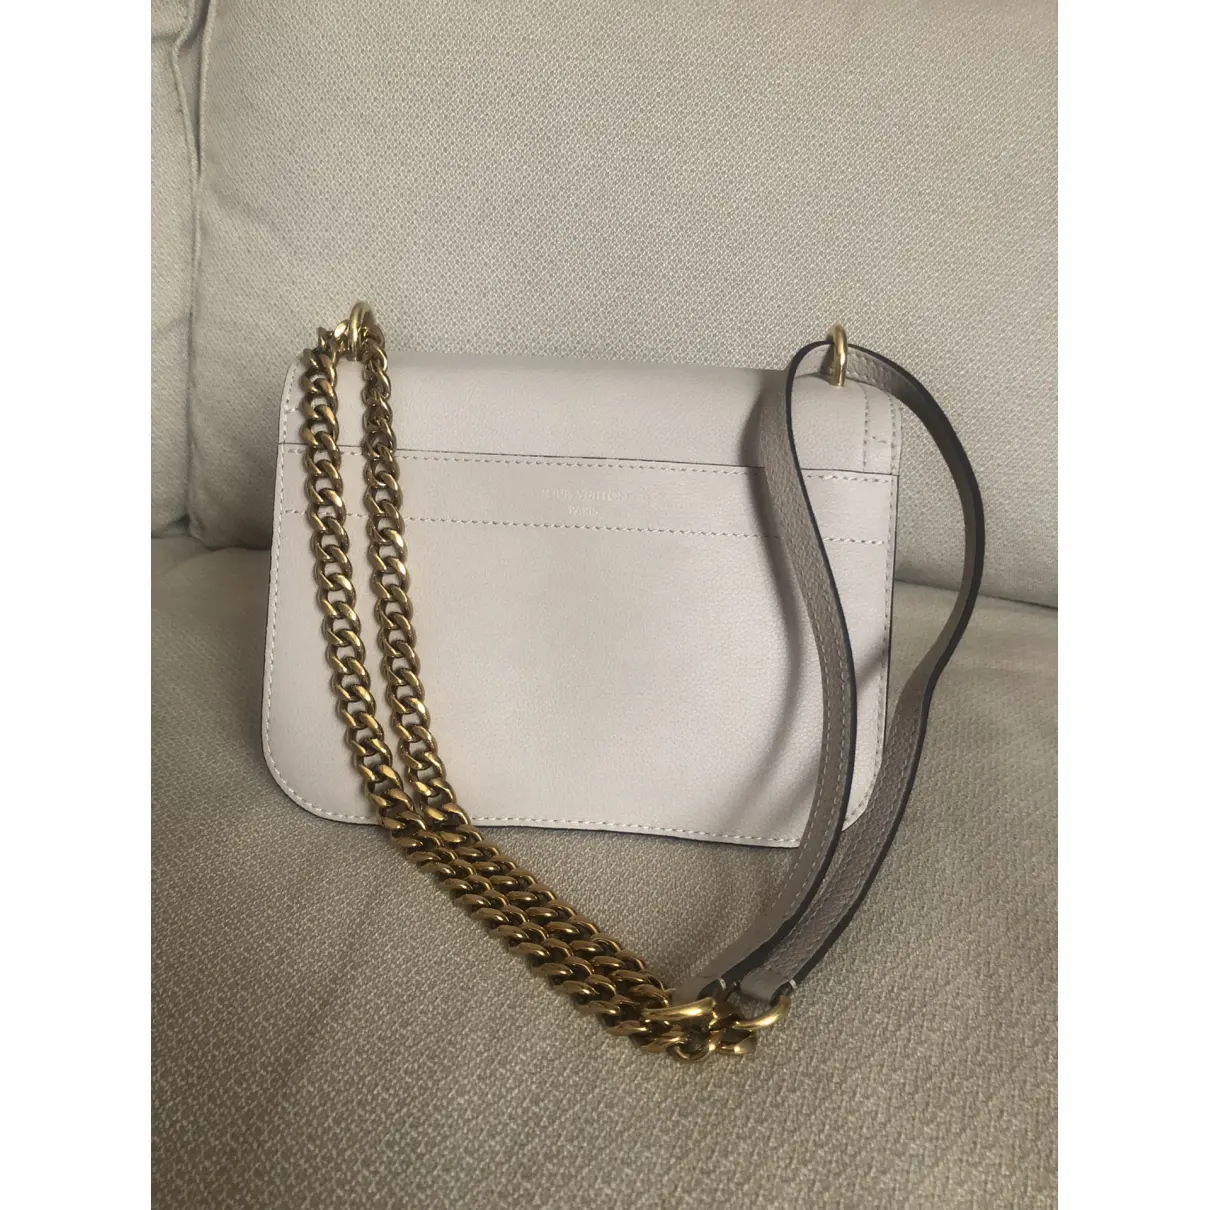 Buy Louis Vuitton Lockme leather handbag online